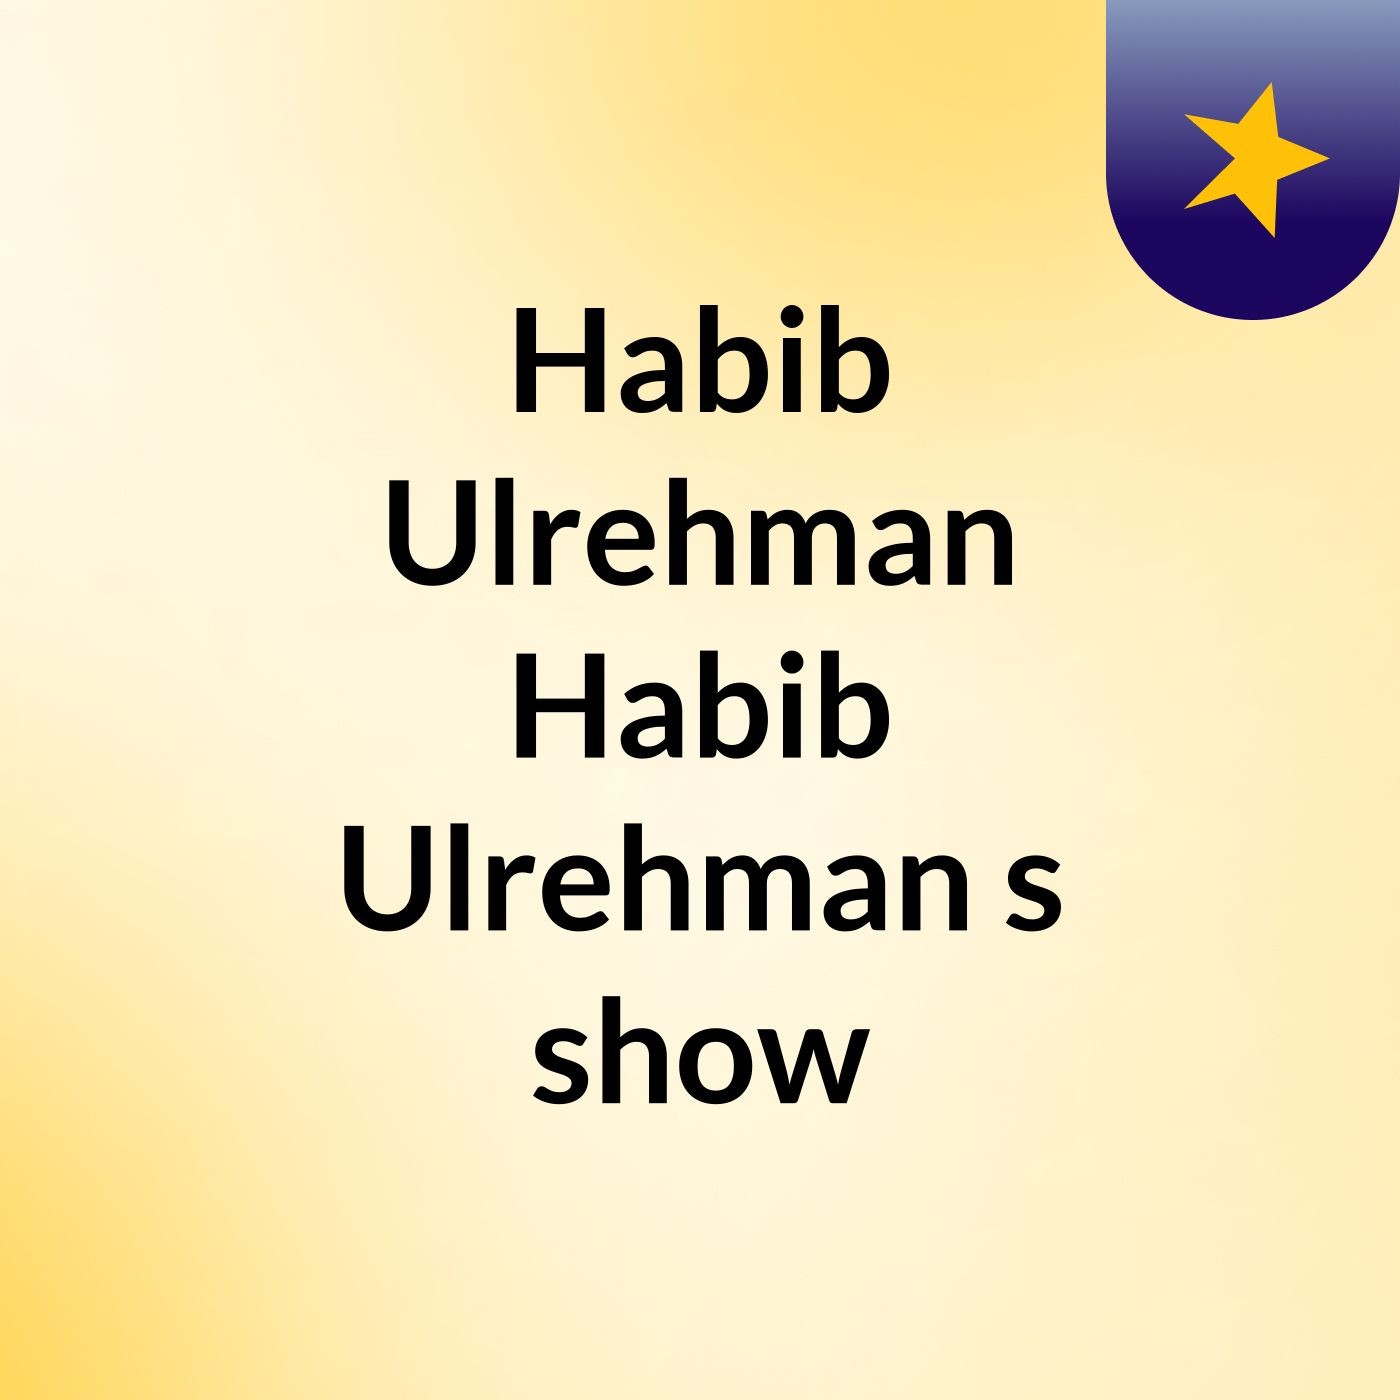 Habib Ulrehman Habib Ulrehman's show